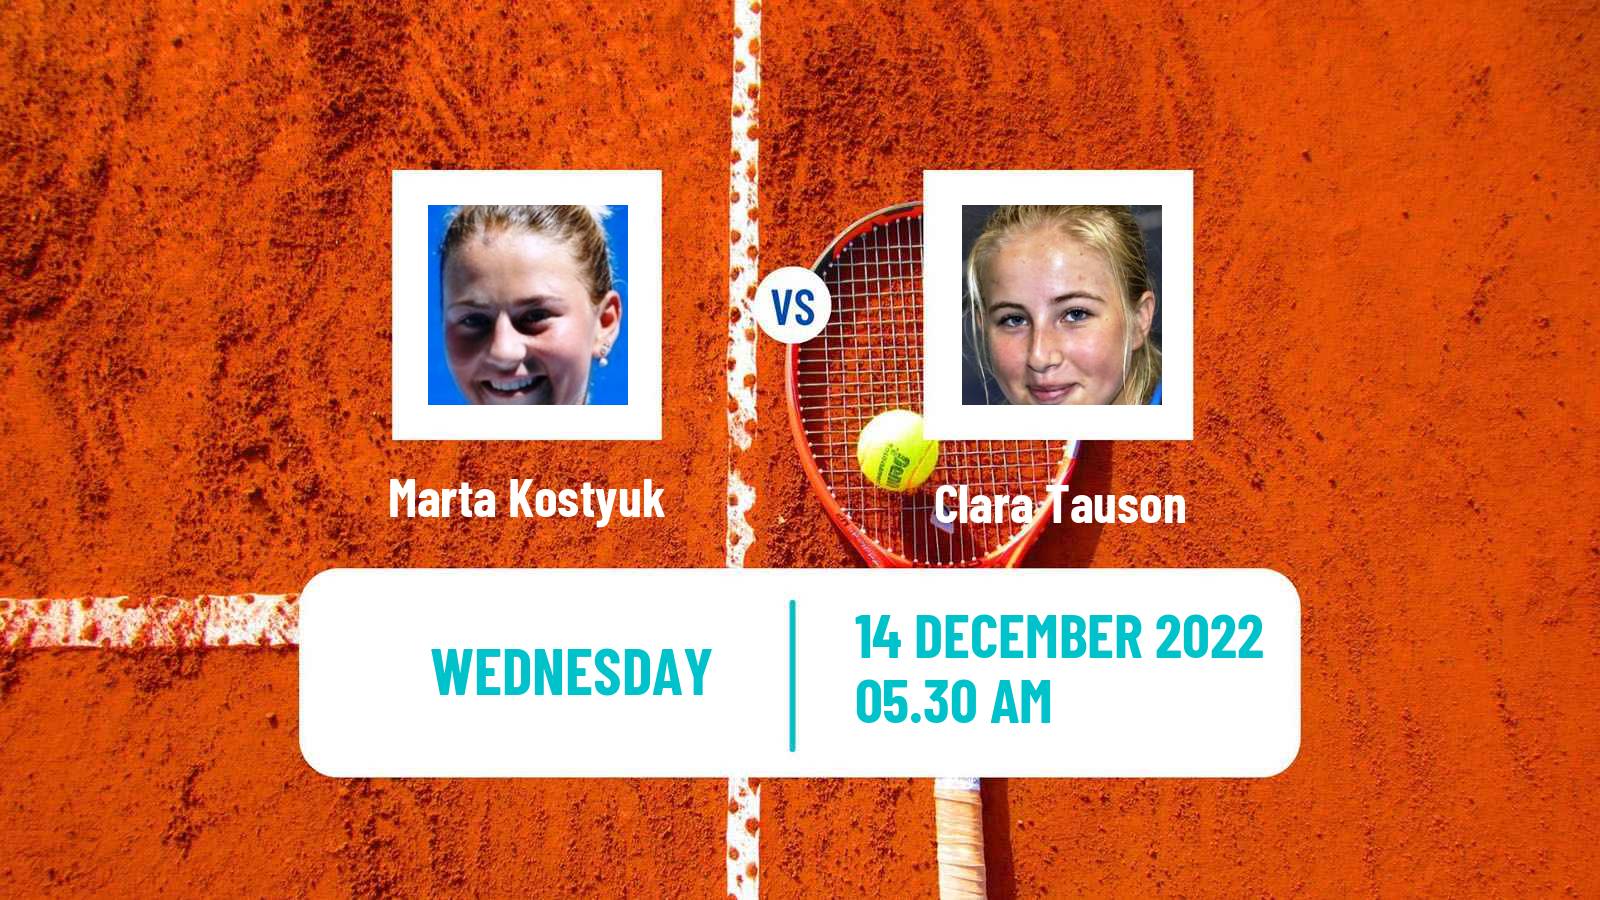 Tennis ATP Challenger Marta Kostyuk - Clara Tauson